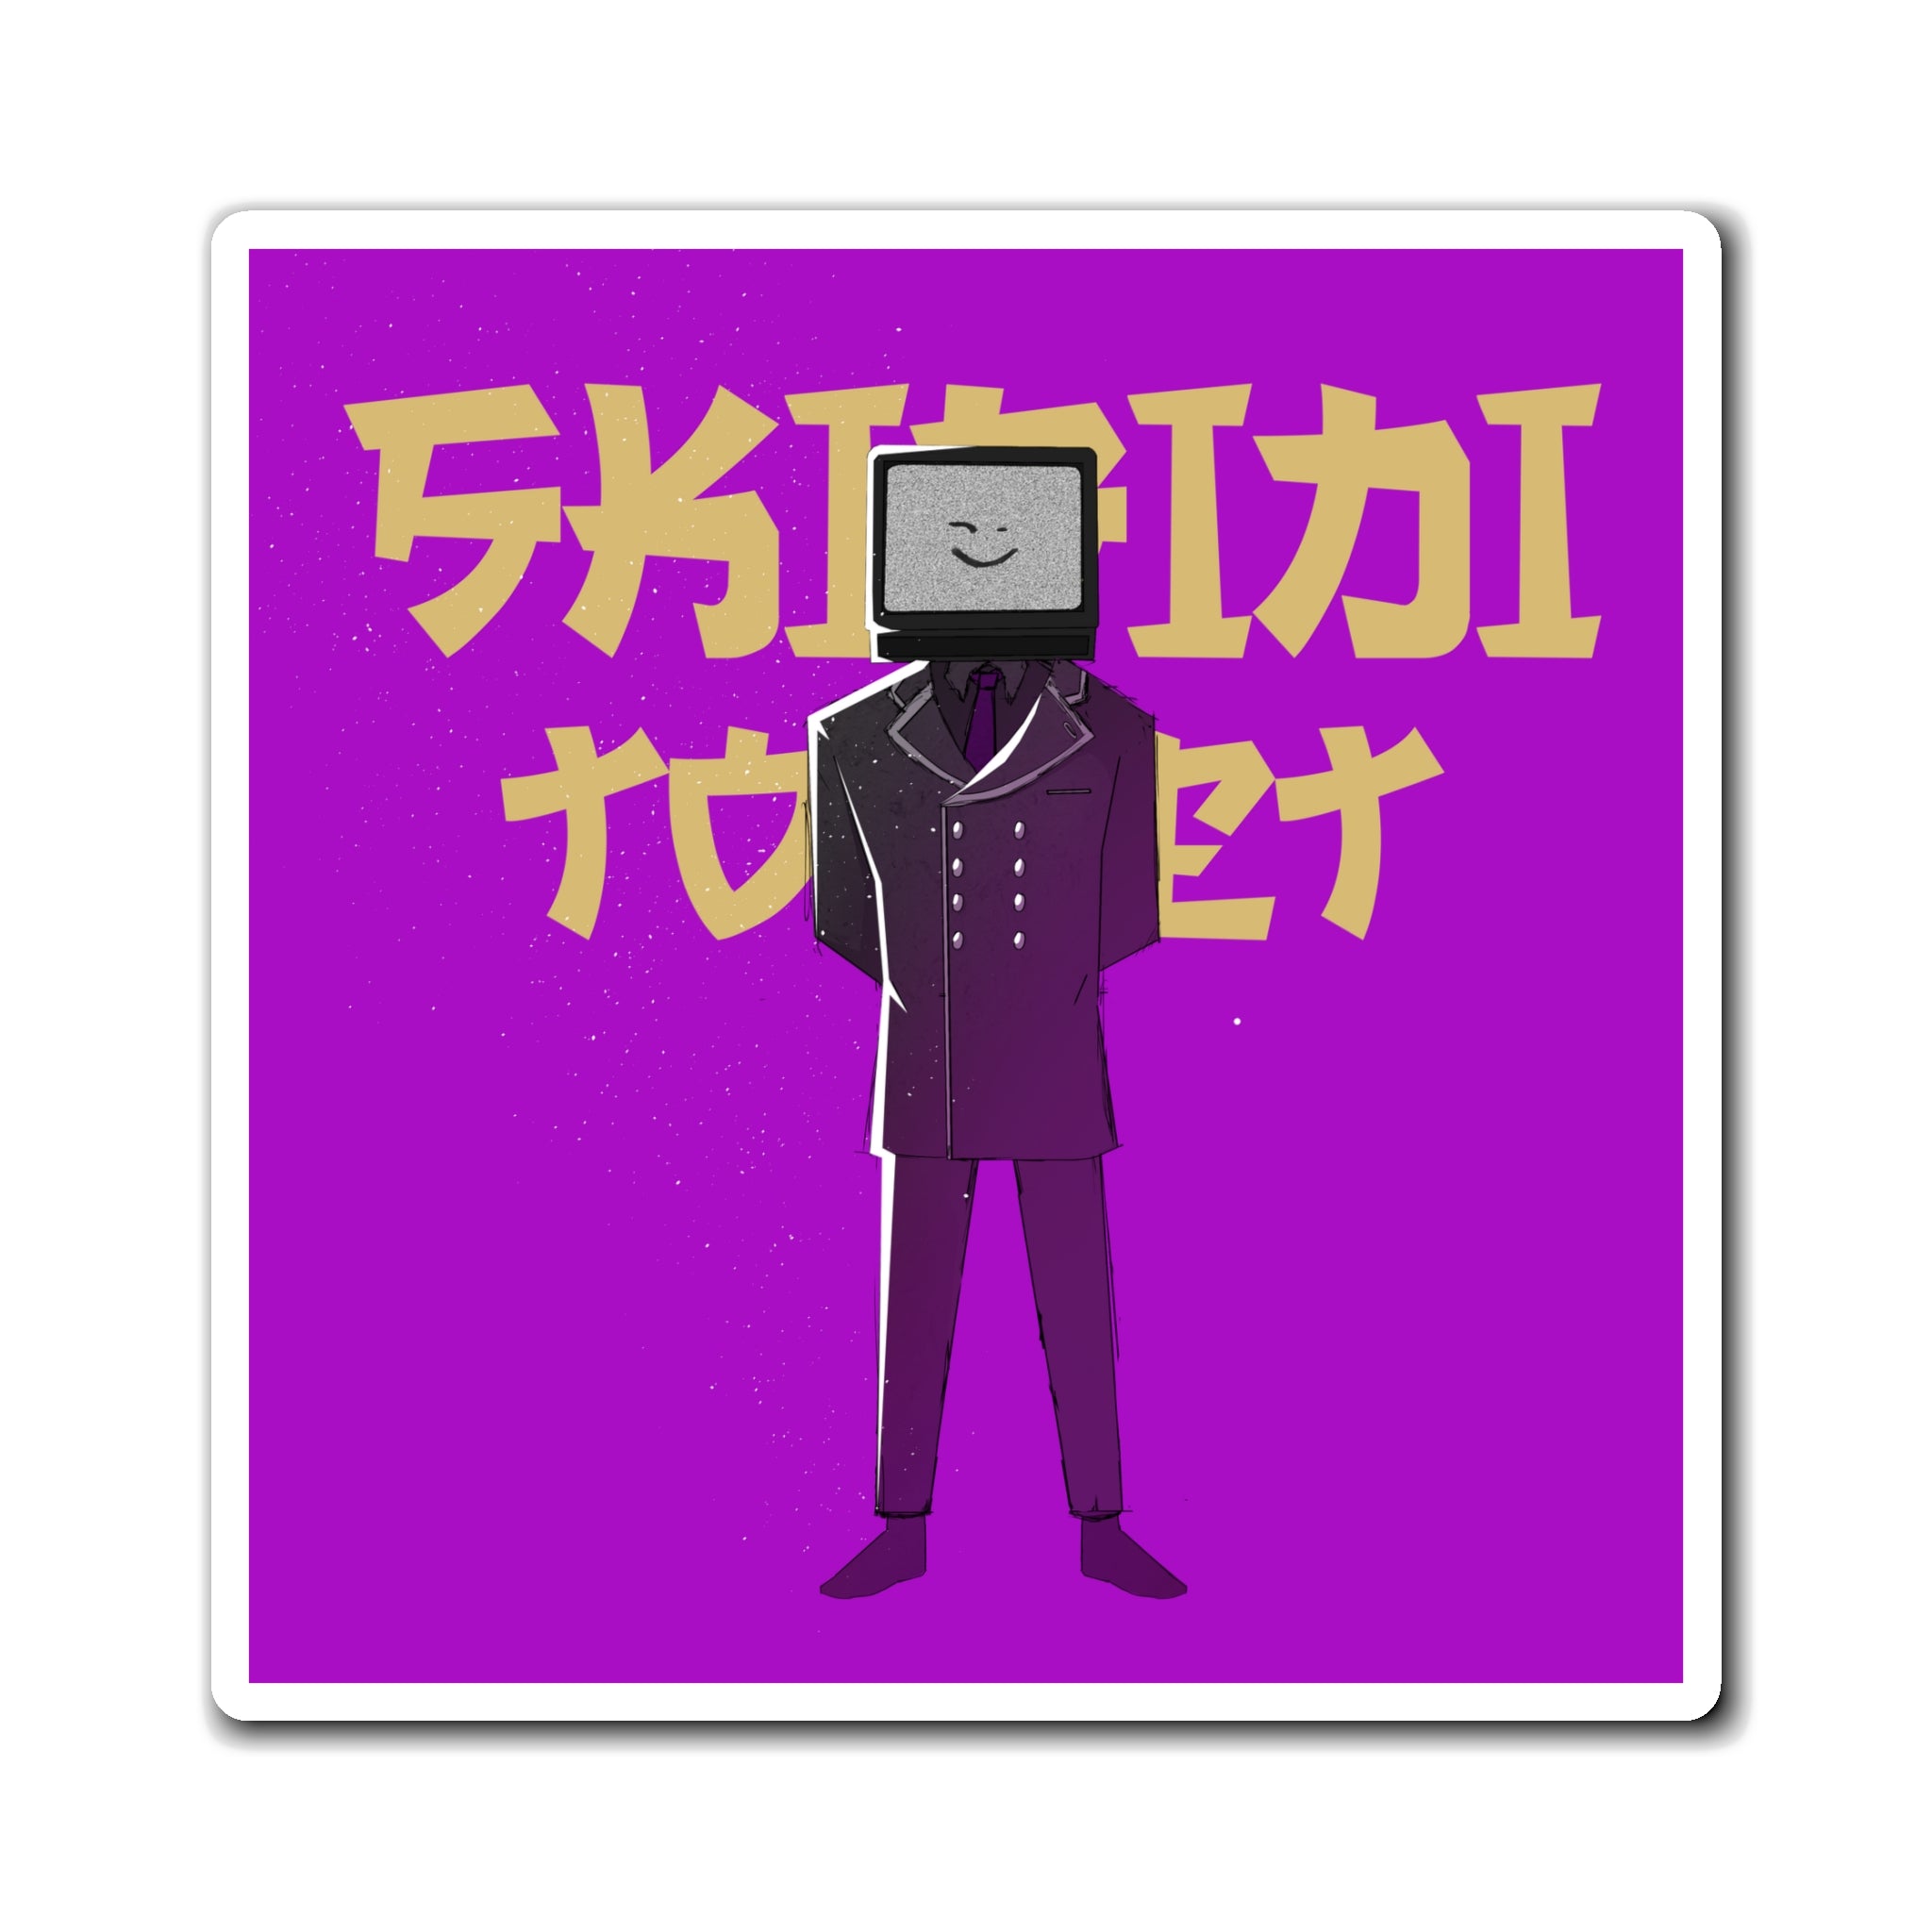 Purple debonair TV Man magnet with skibidi toilet gold text